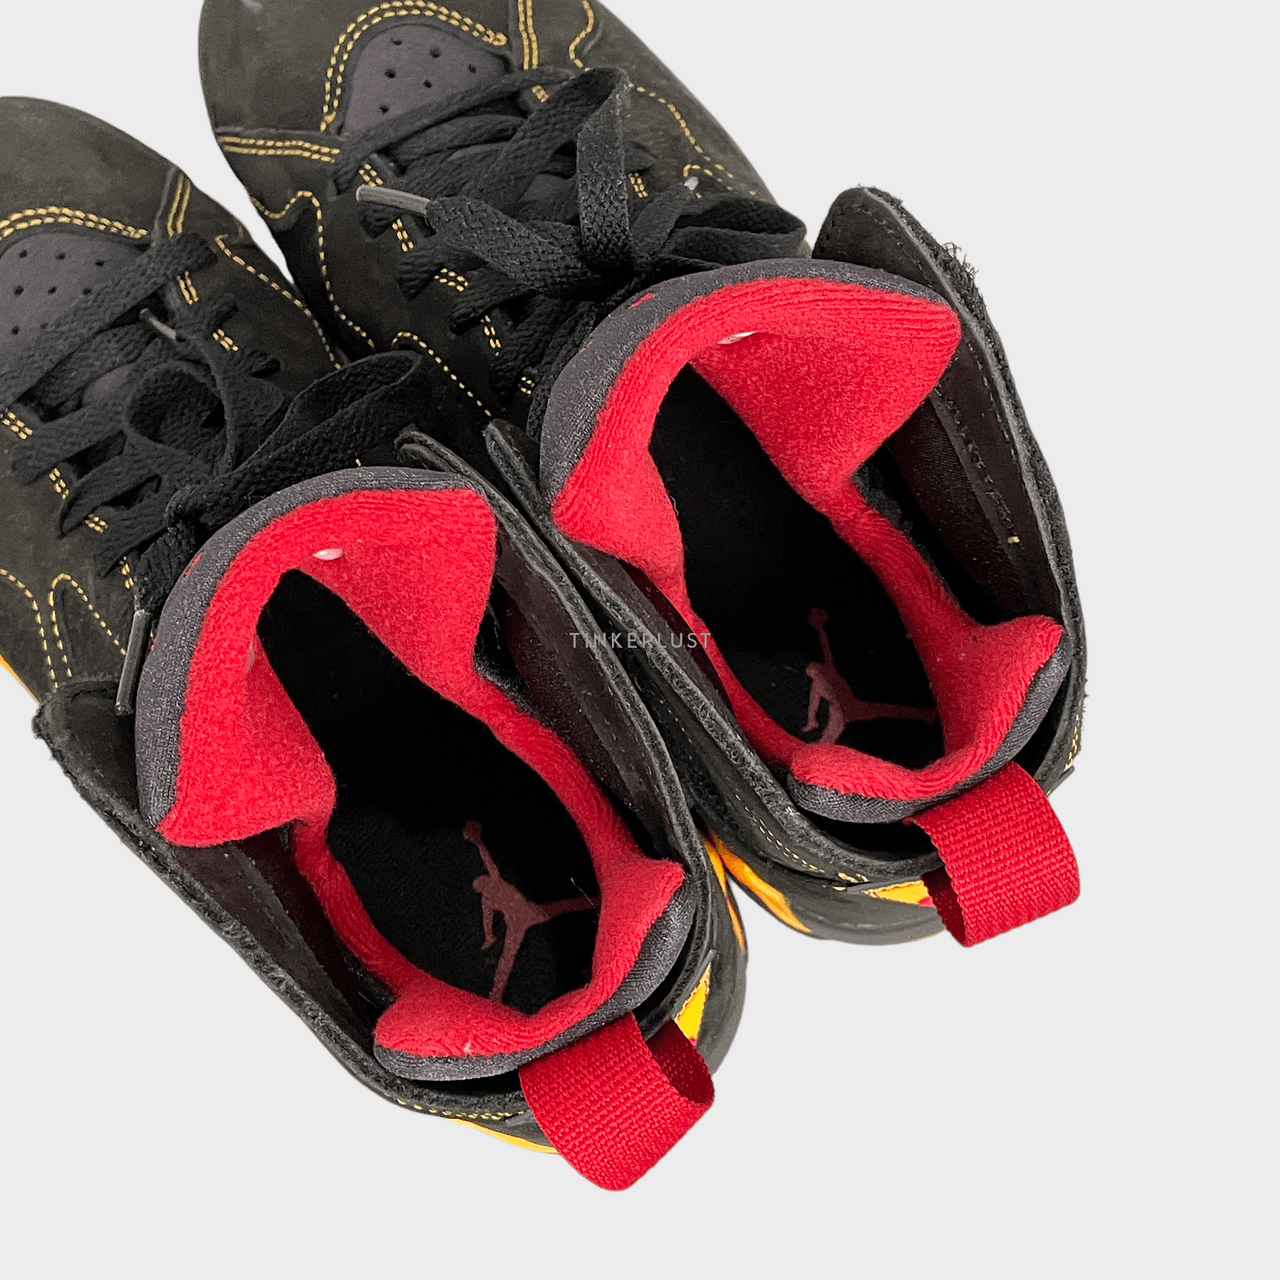 Nike Air Jordan 7 Retro Citrus Black Shoes